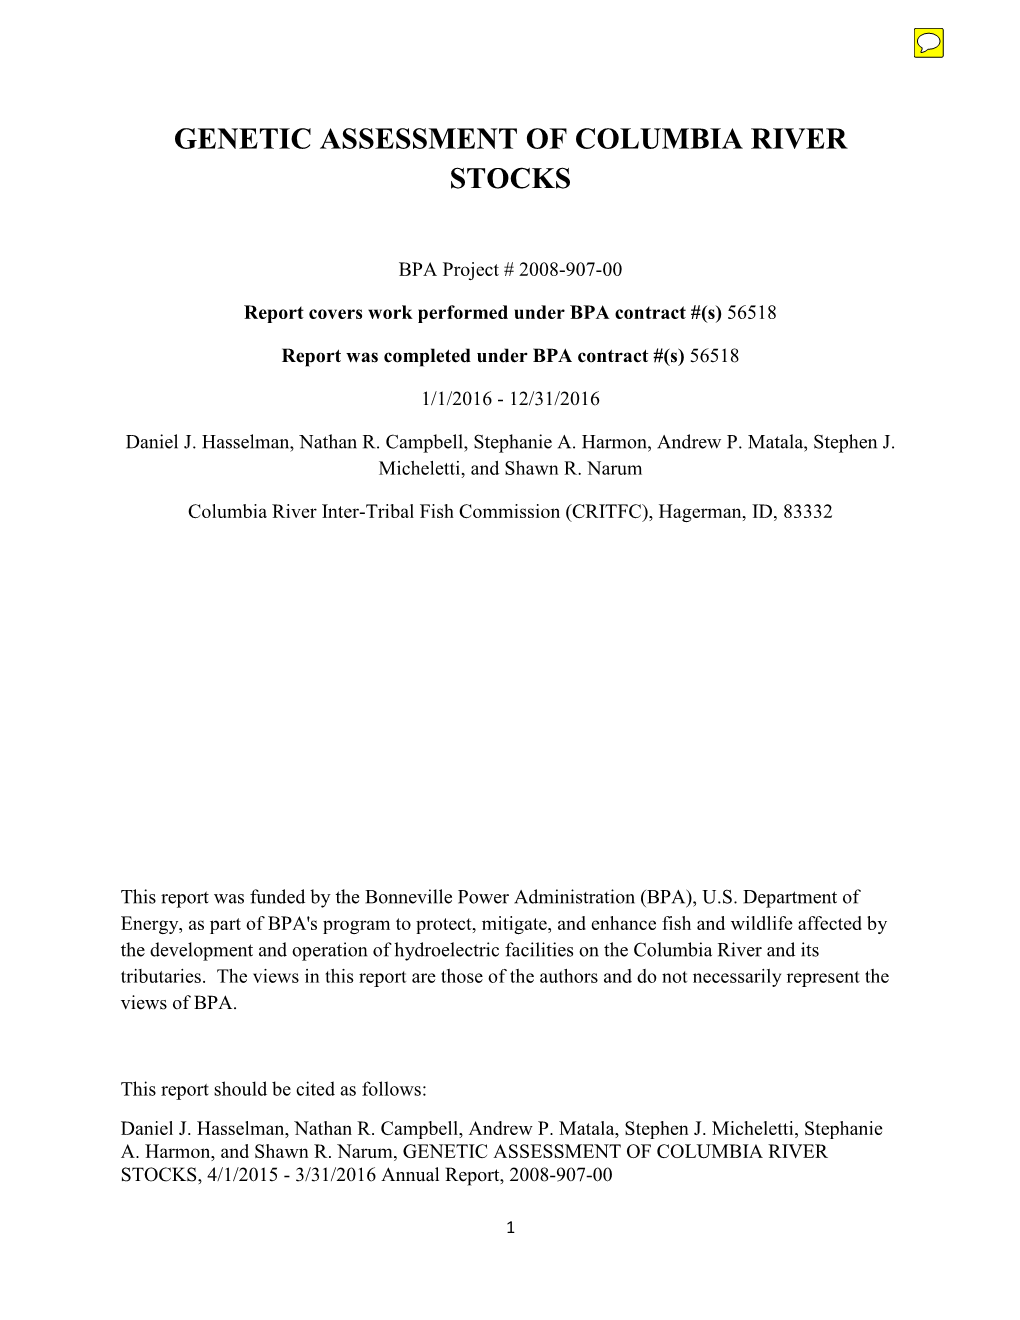 Genetic Assessment of Columbia River Stocks